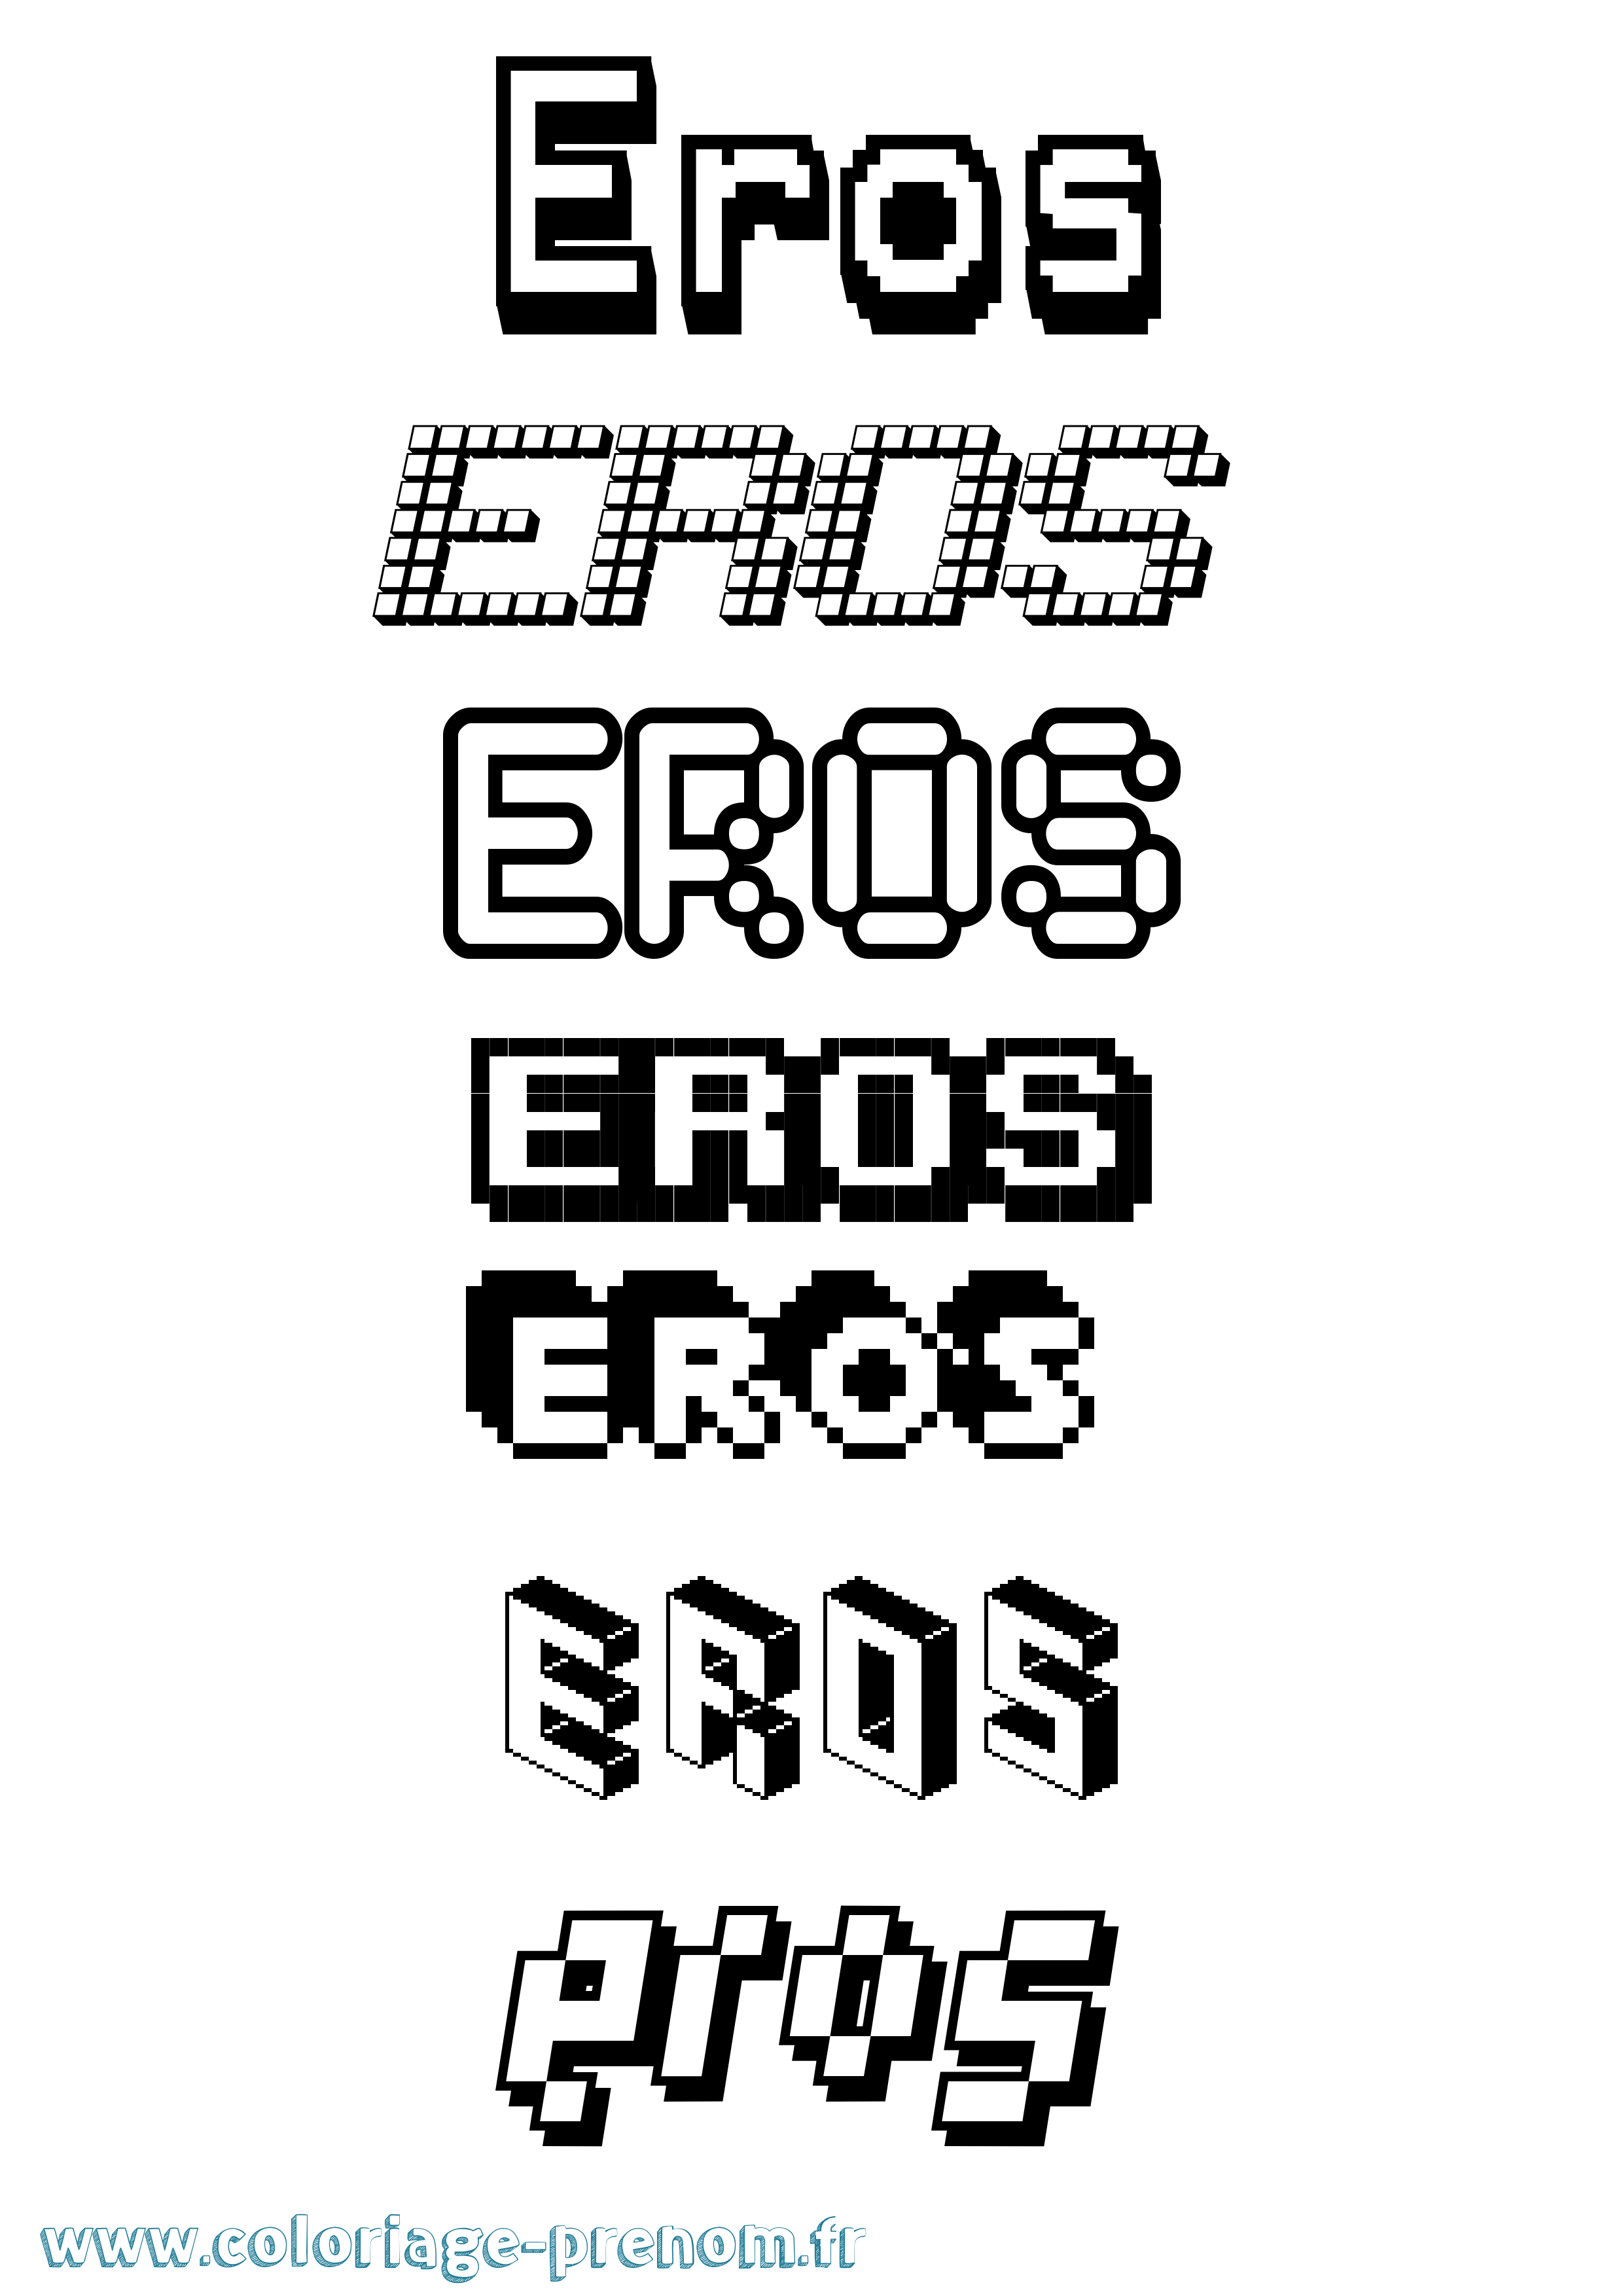 Coloriage prénom Eros Pixel